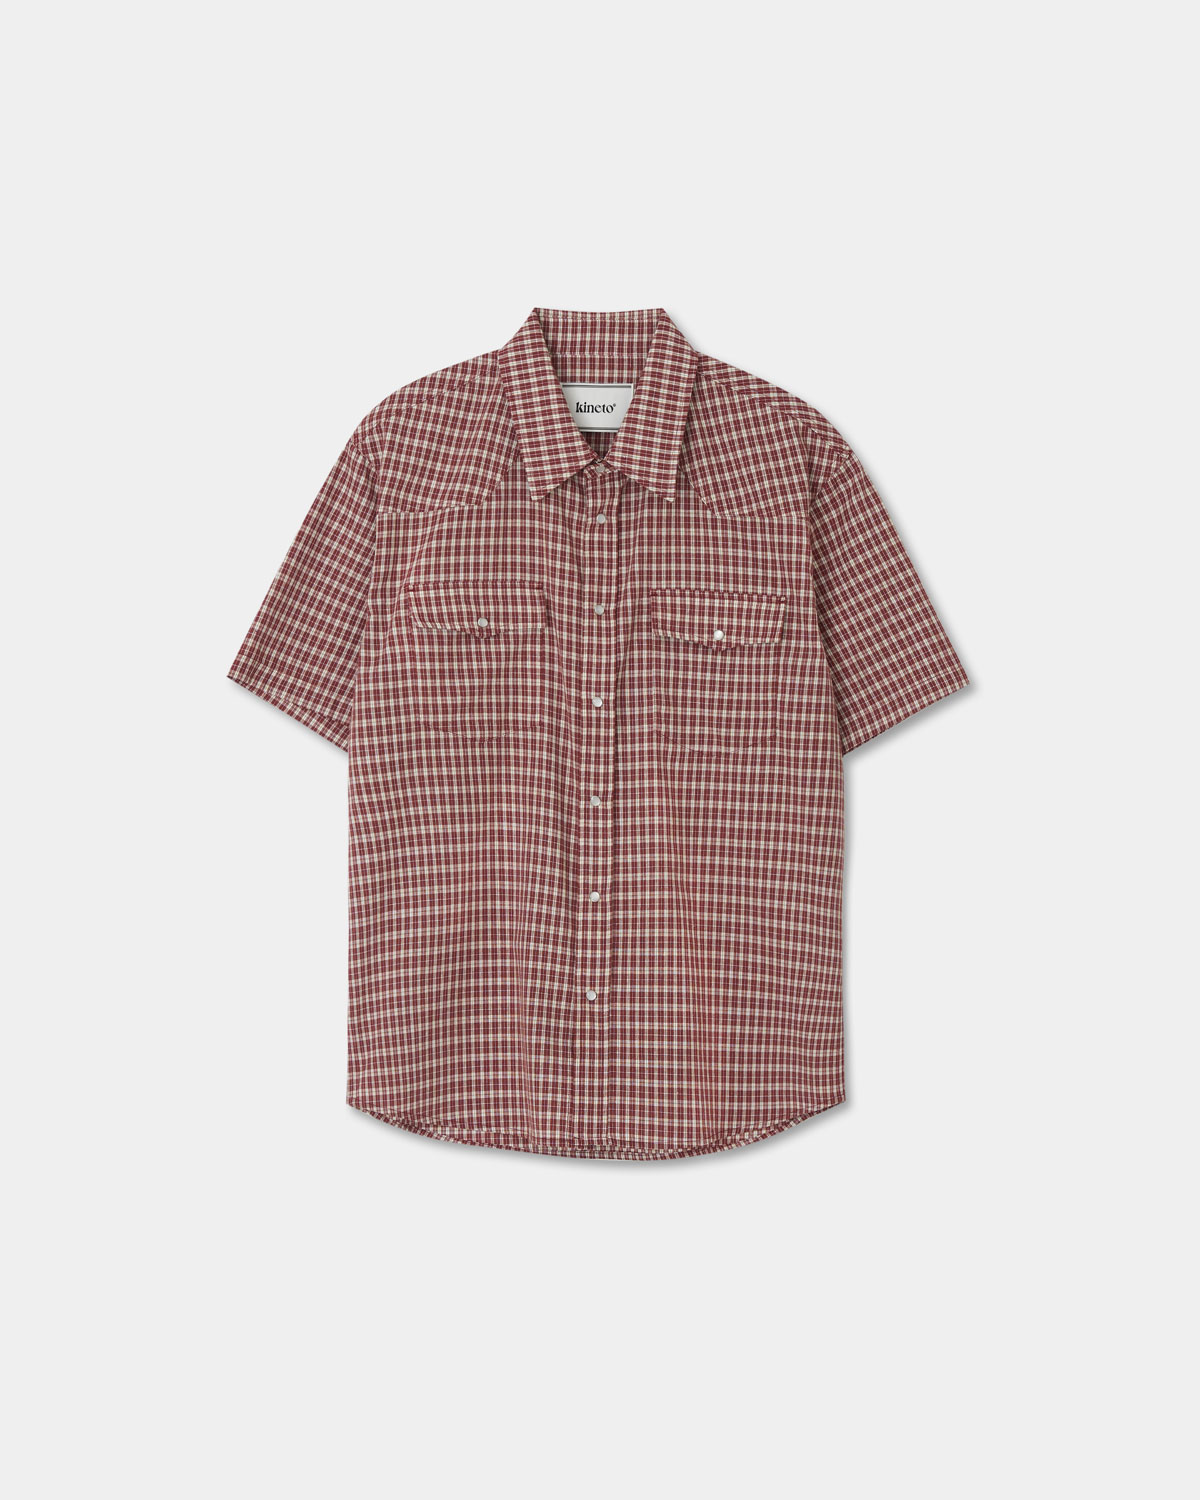 Western Checked Pattern Shirt_Burgundy_예약 배송 05/17